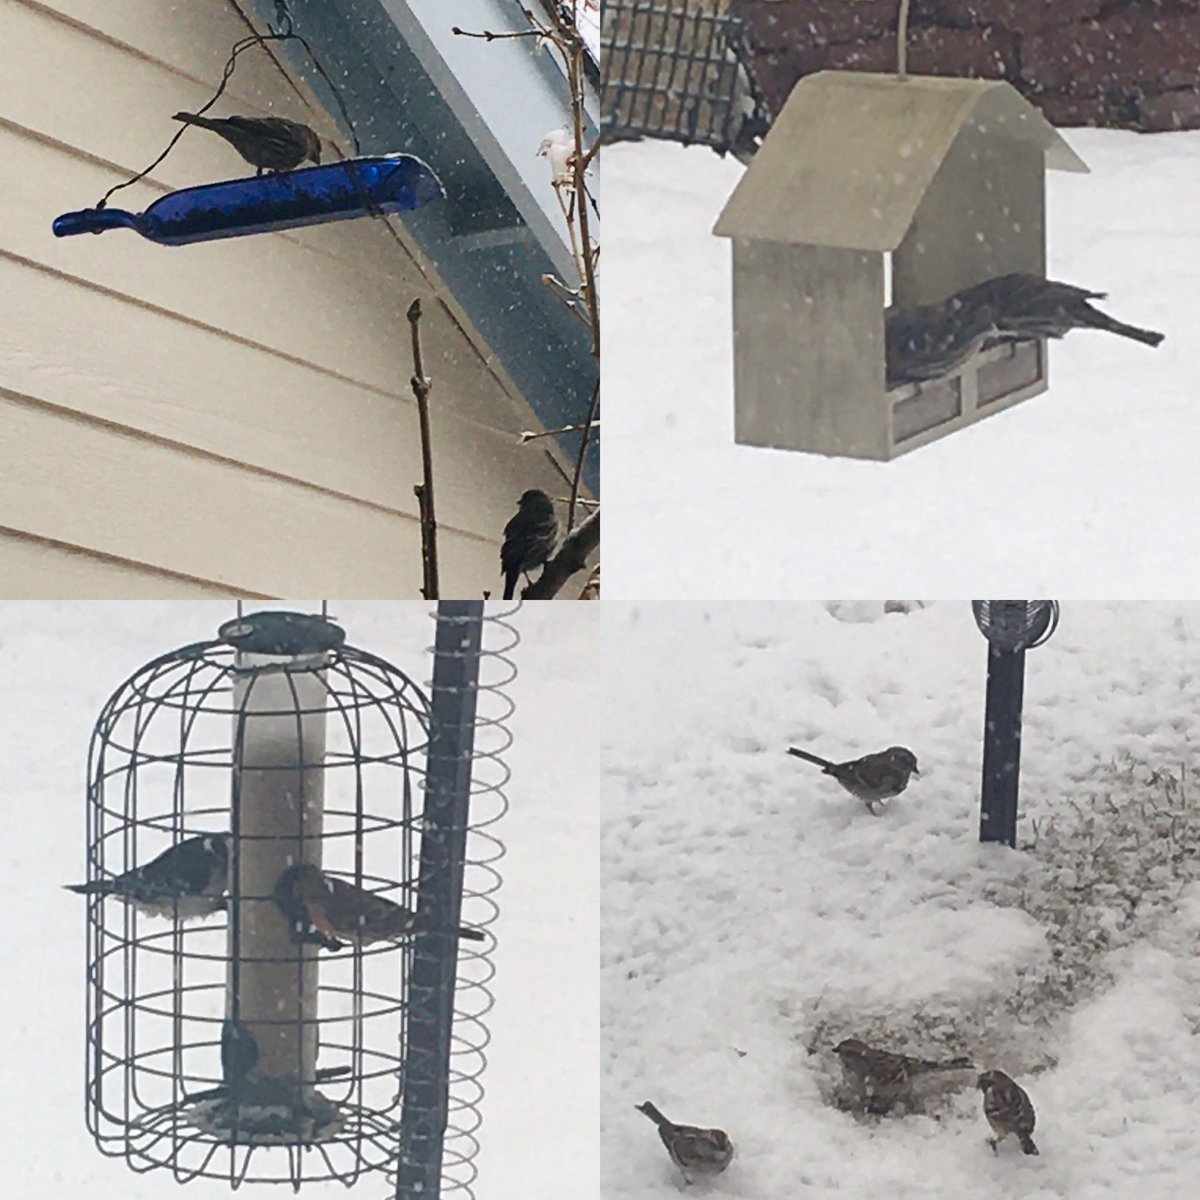 Happy hour for my backyard feathered friends. 💙🐦#FeedBirds #COBirds